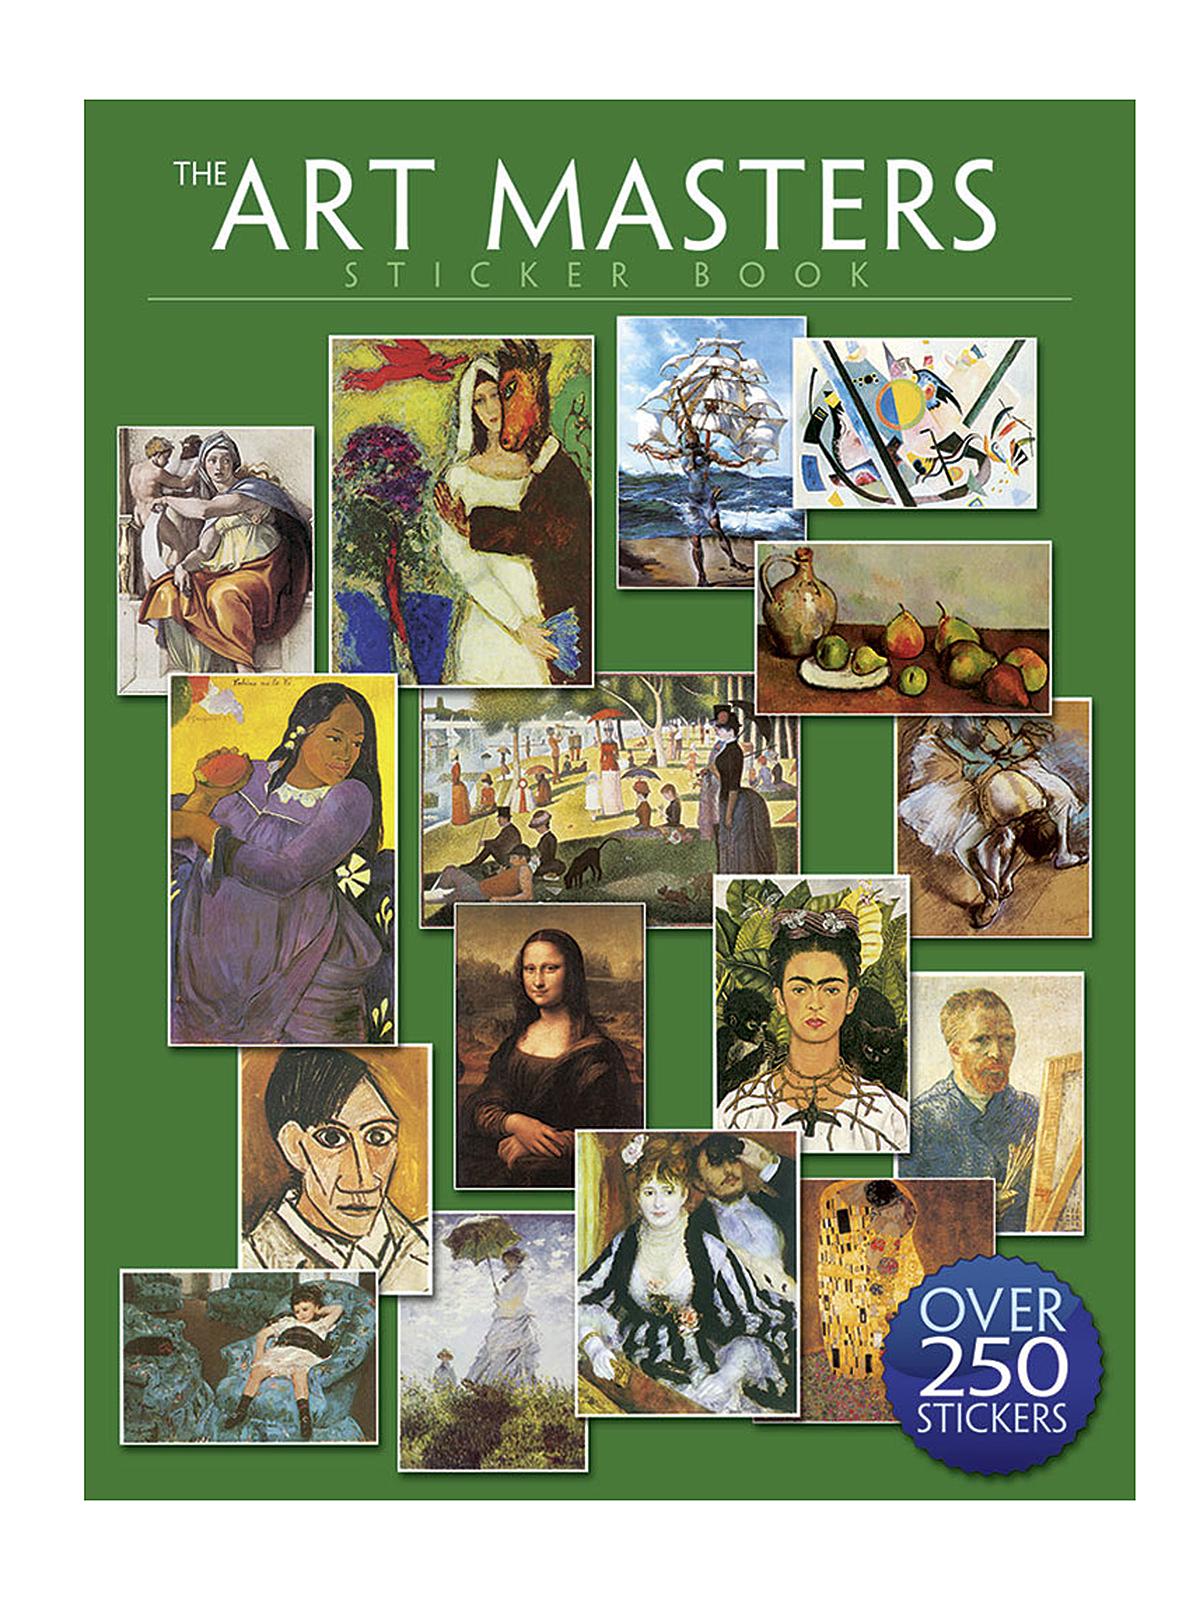 The Art Masters Sticker Book Each